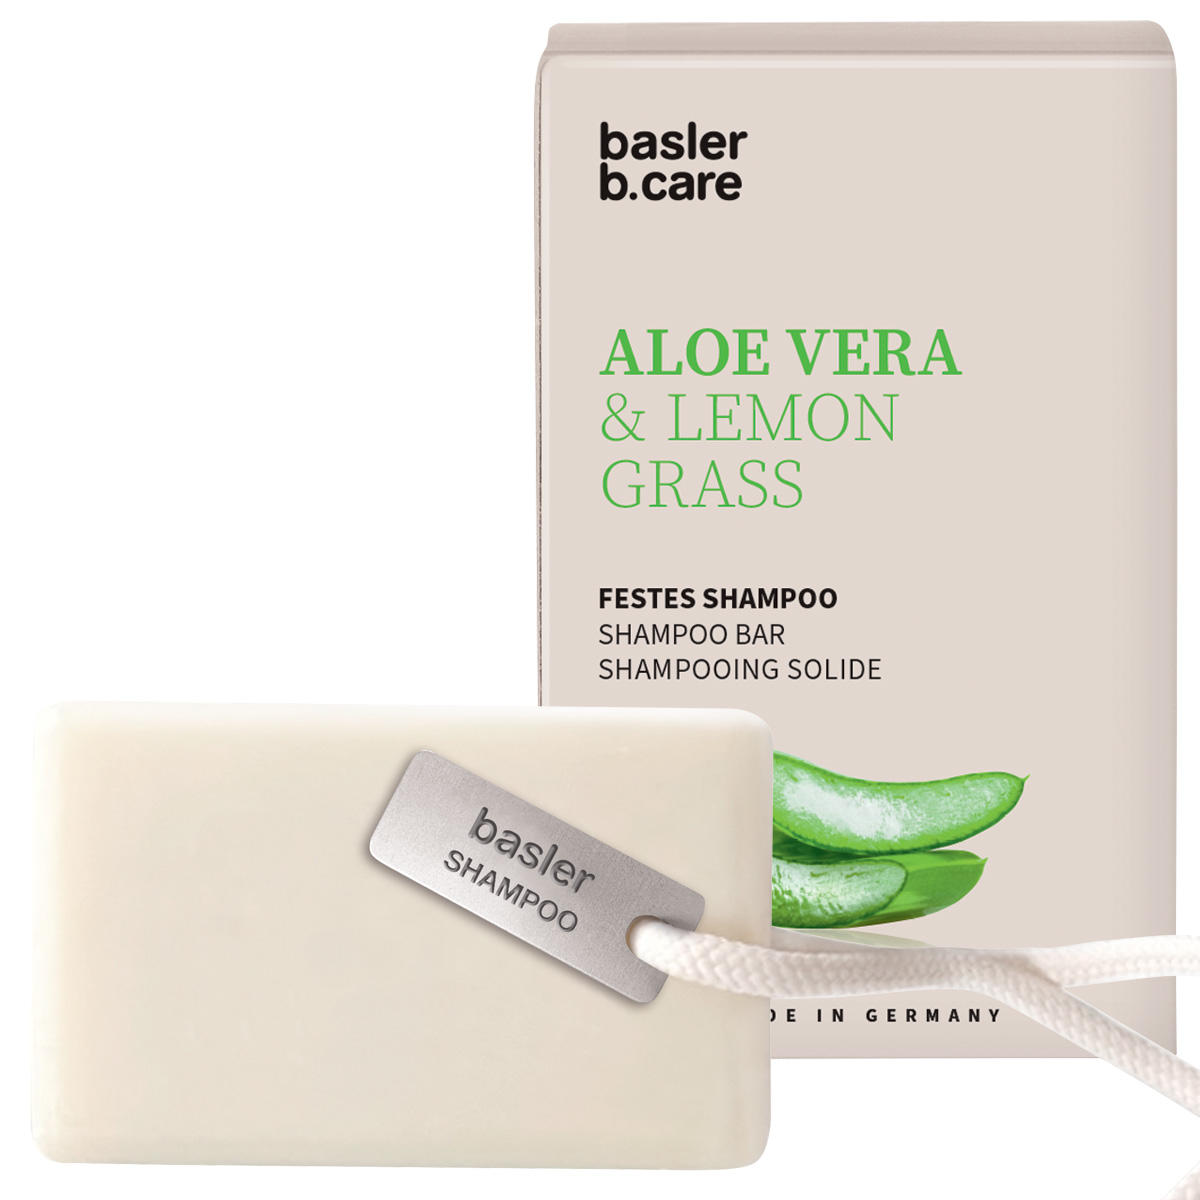 Basler Solid Shampoo Aloe Vera & Lemongrass incl. cord with pendant 100 g - 1